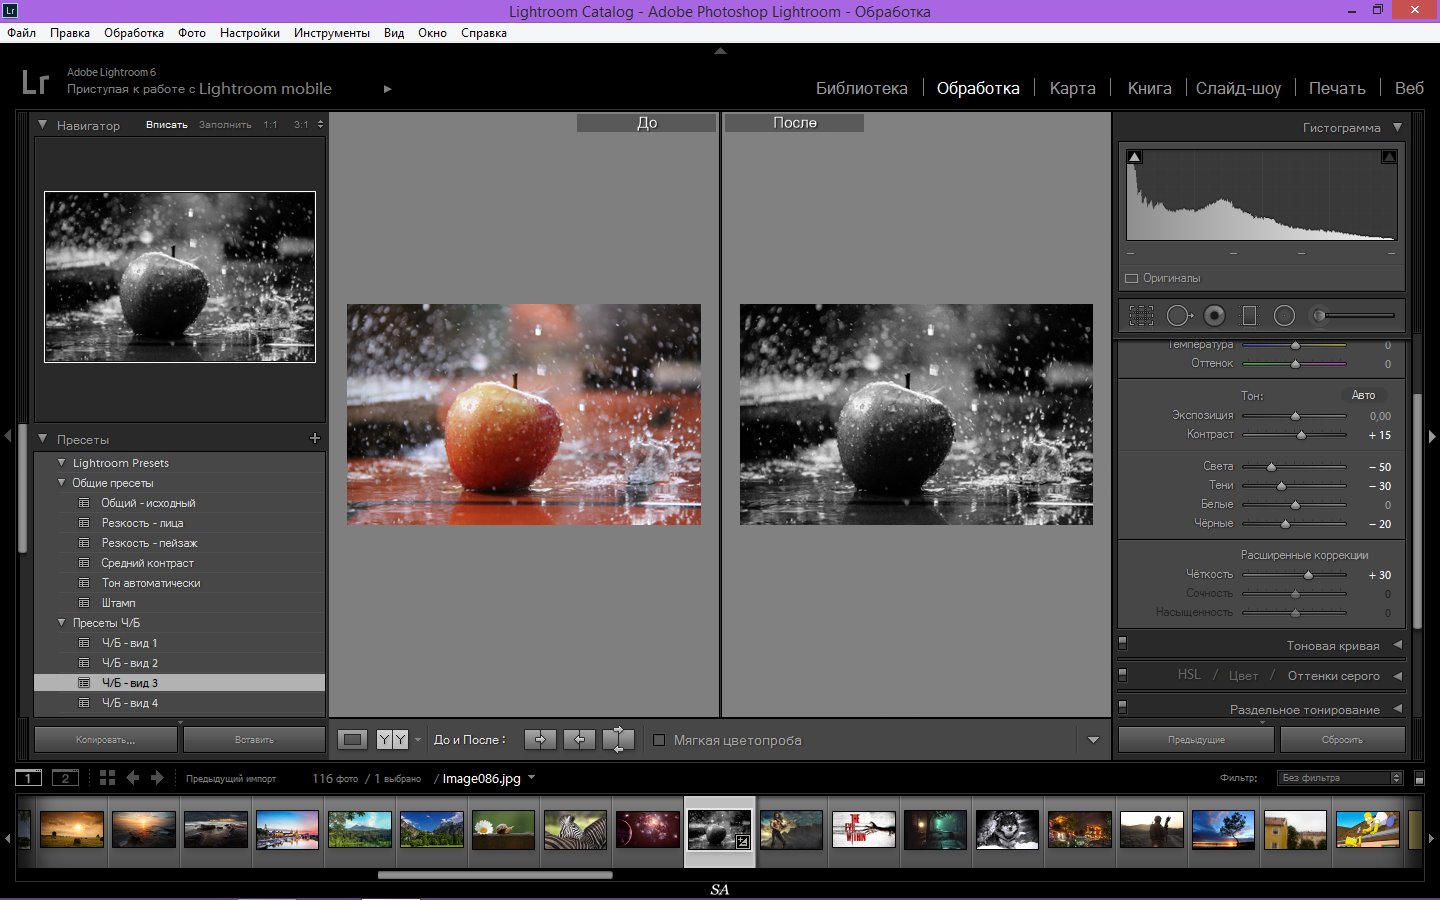 Adobe Photoshop CS5 Portable Download